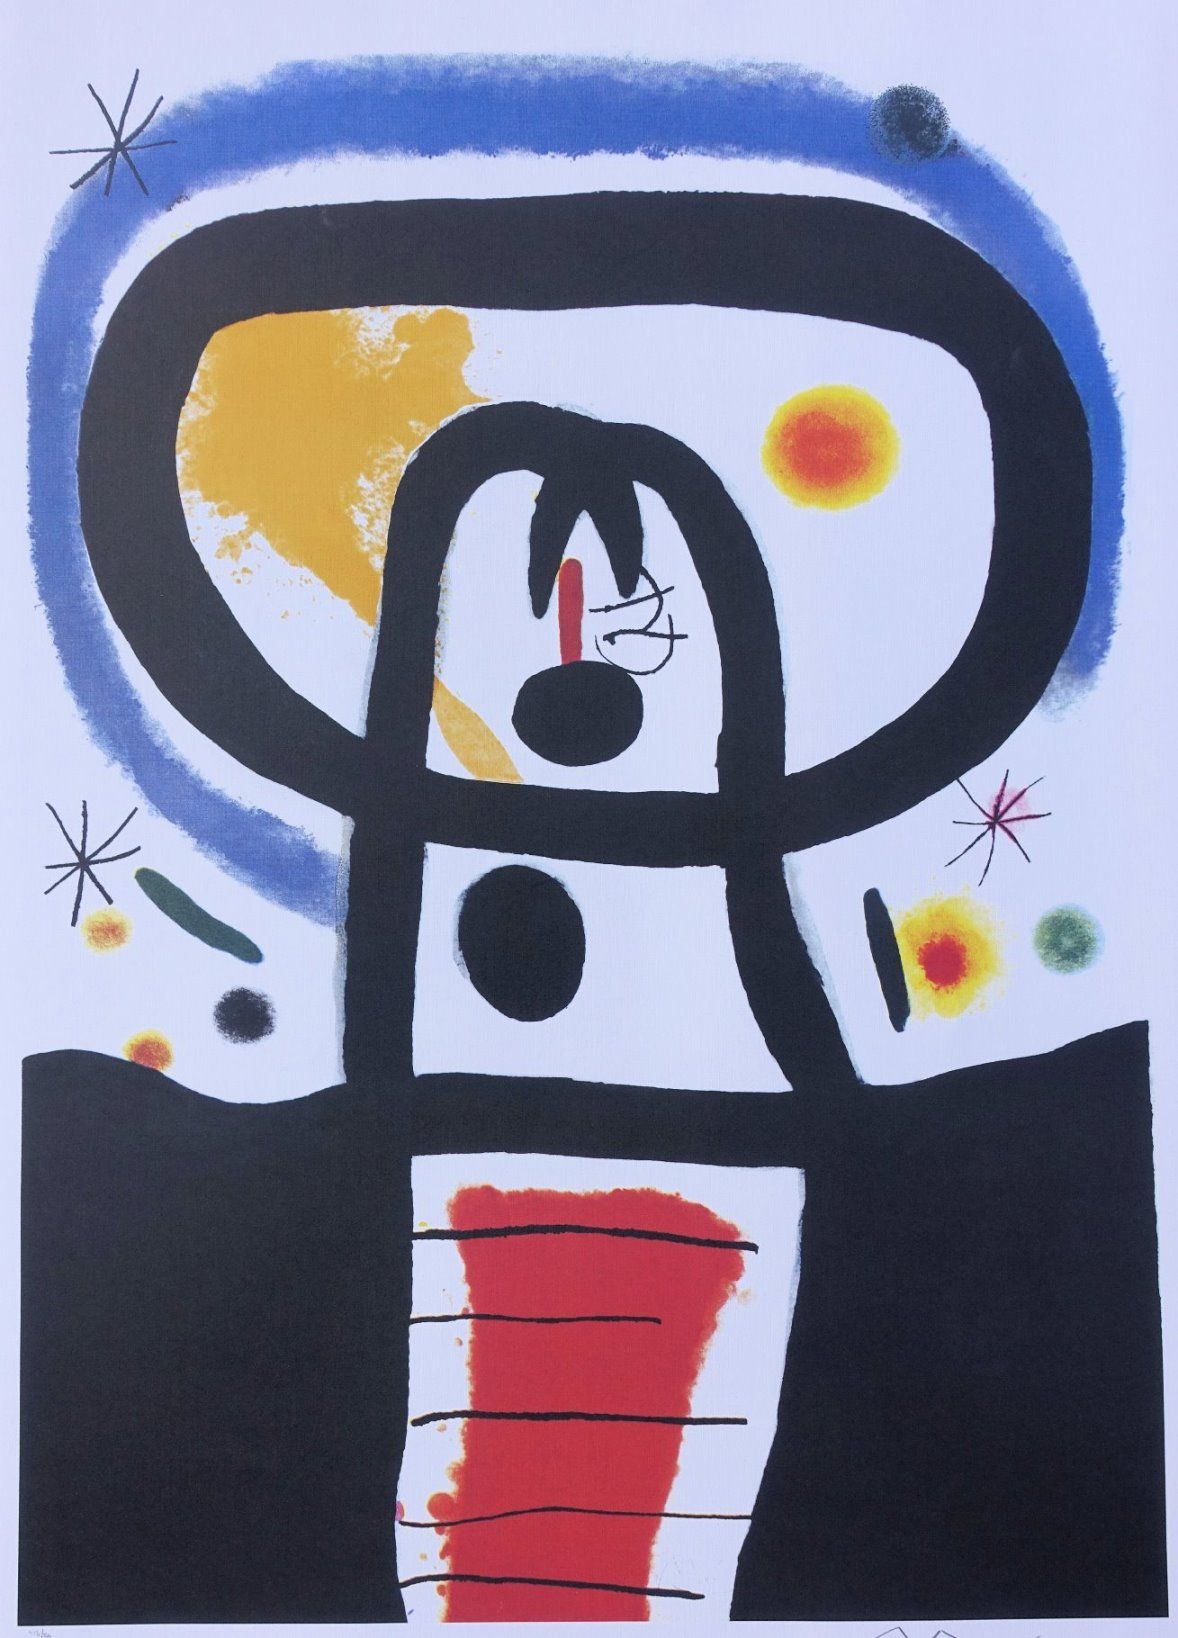 Joan Miro JOAN MIRO (1893-1983) (d'après)

Equinoxe

Impression lithographique d&hellip;